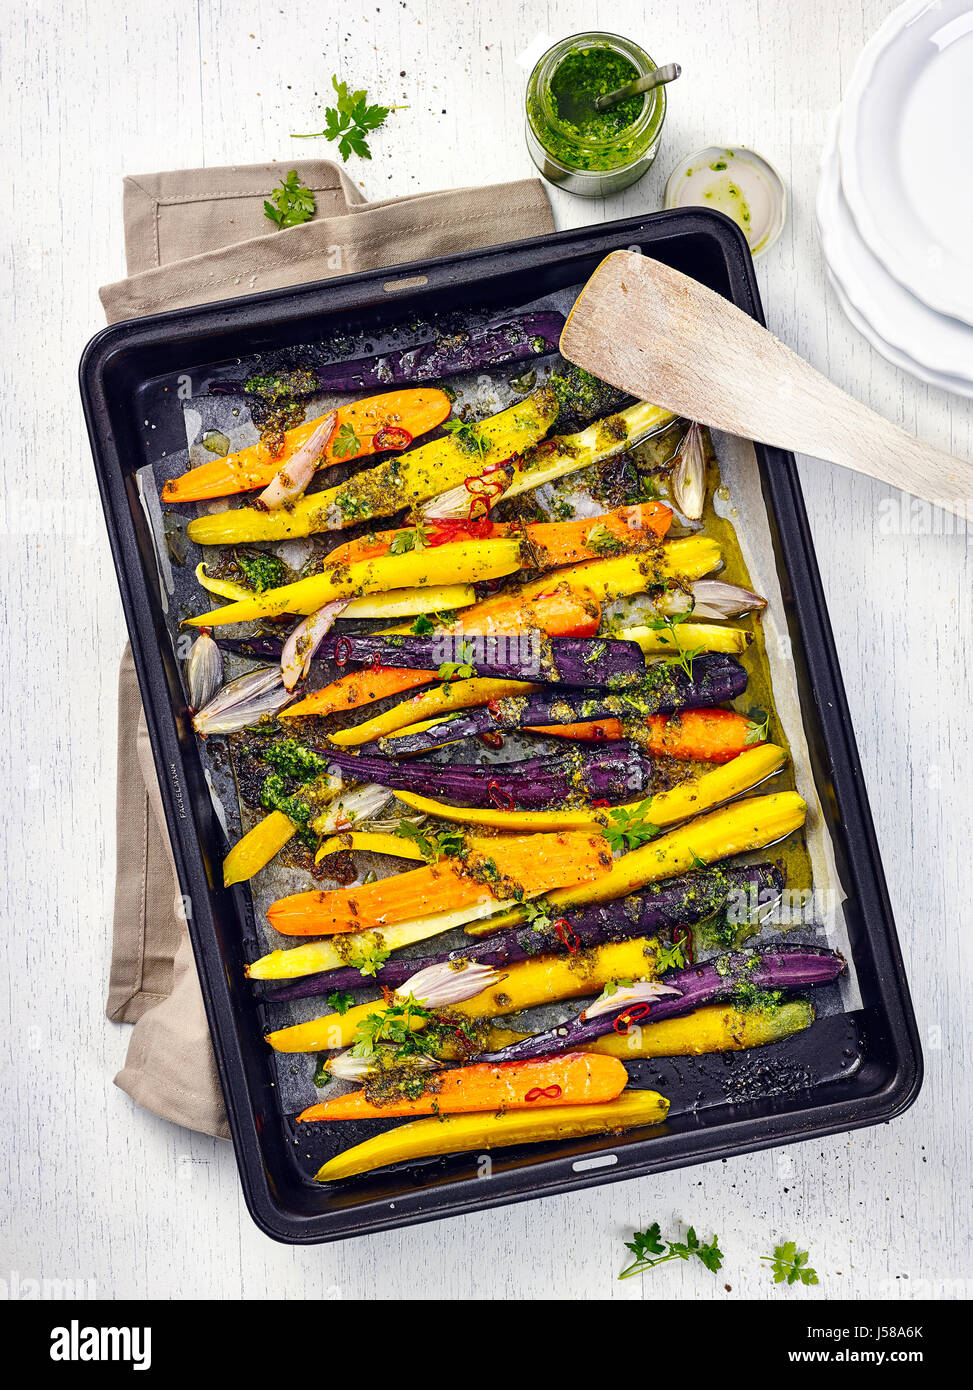 Baked carrots with kale pesto Stock Photo